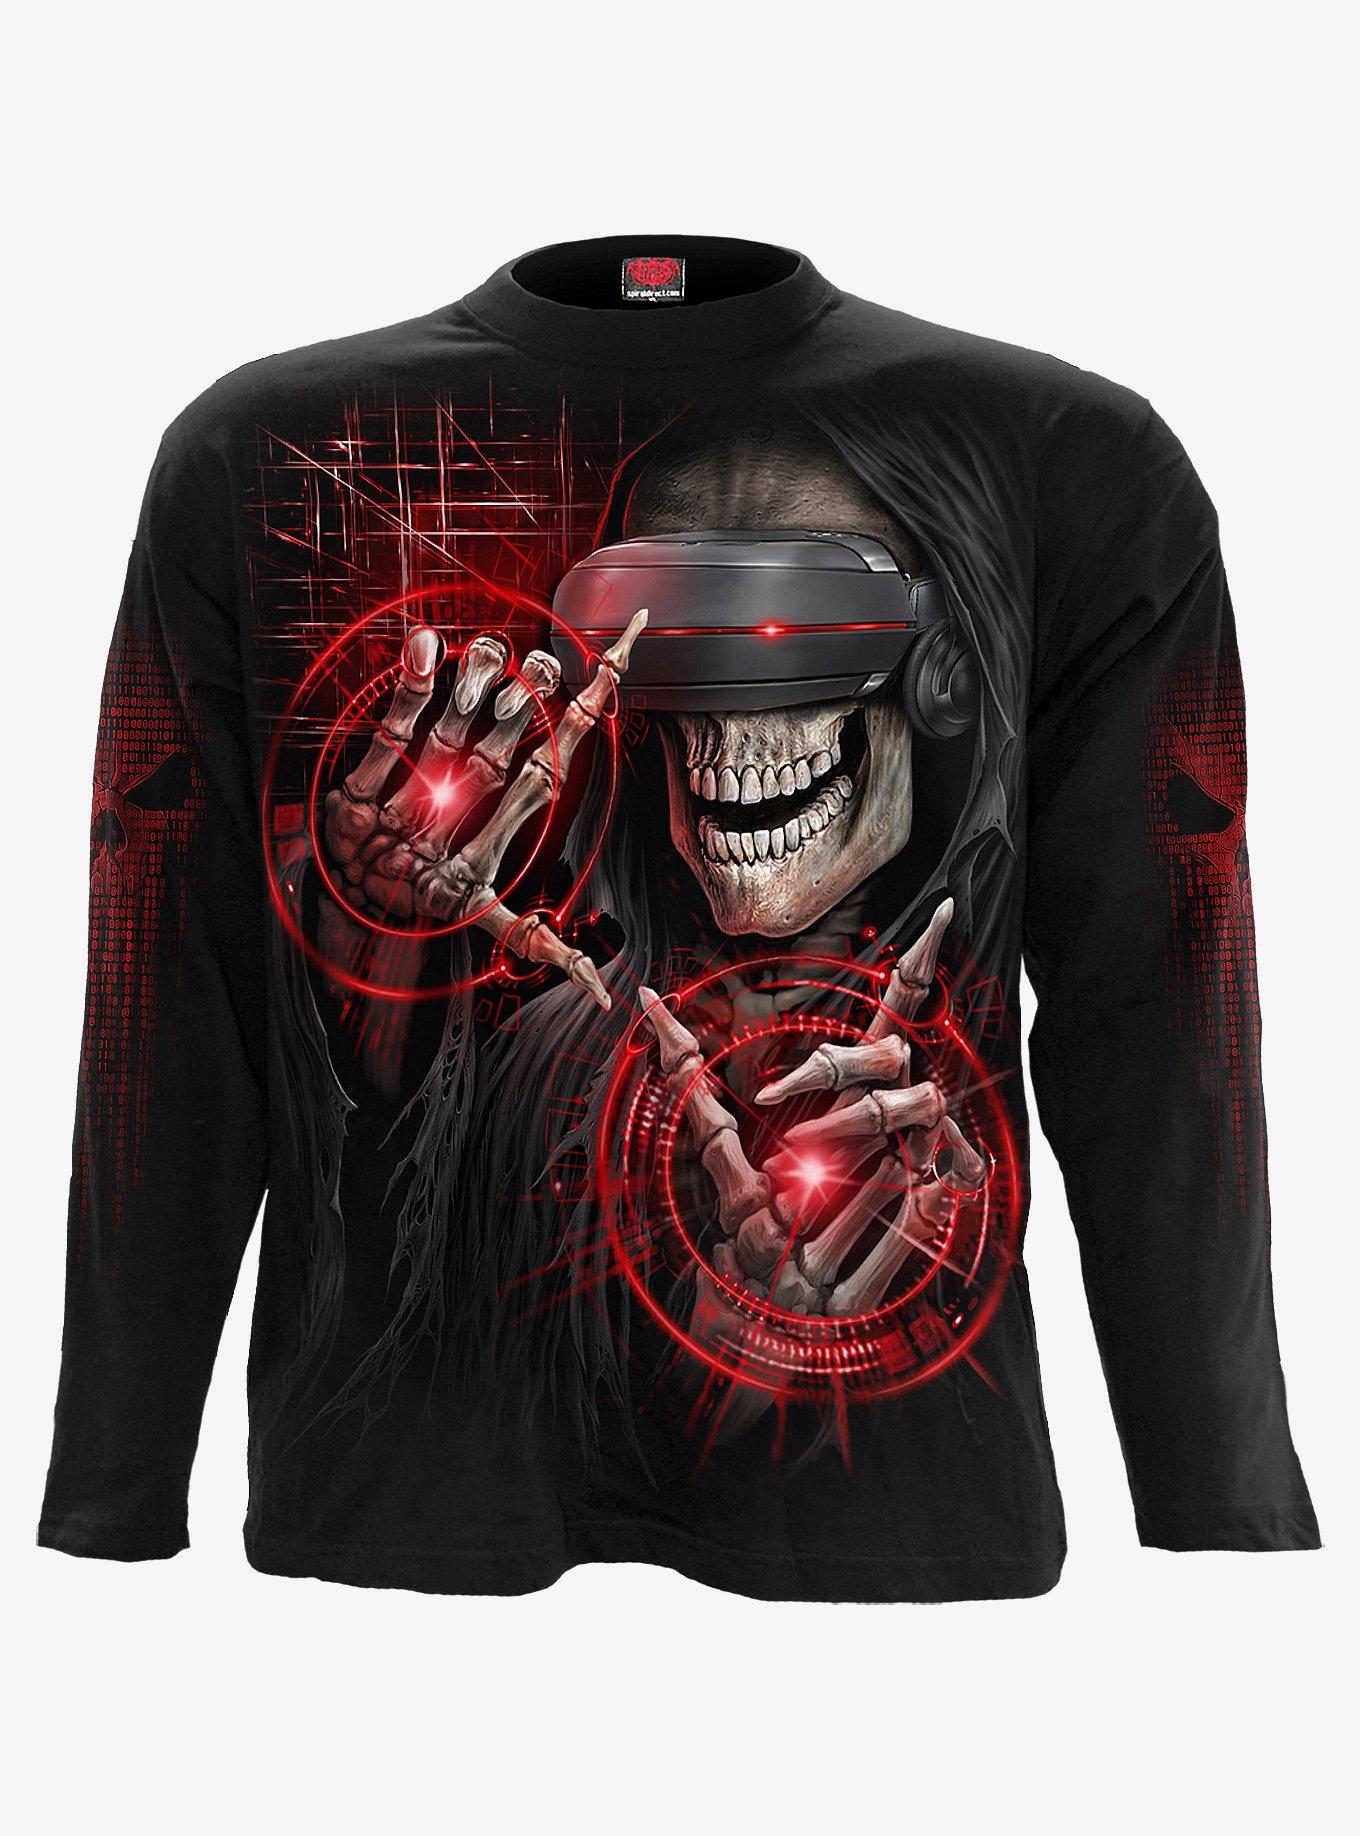 Cyber Death Black Longsleeve T-Shirt, BLACK, hi-res